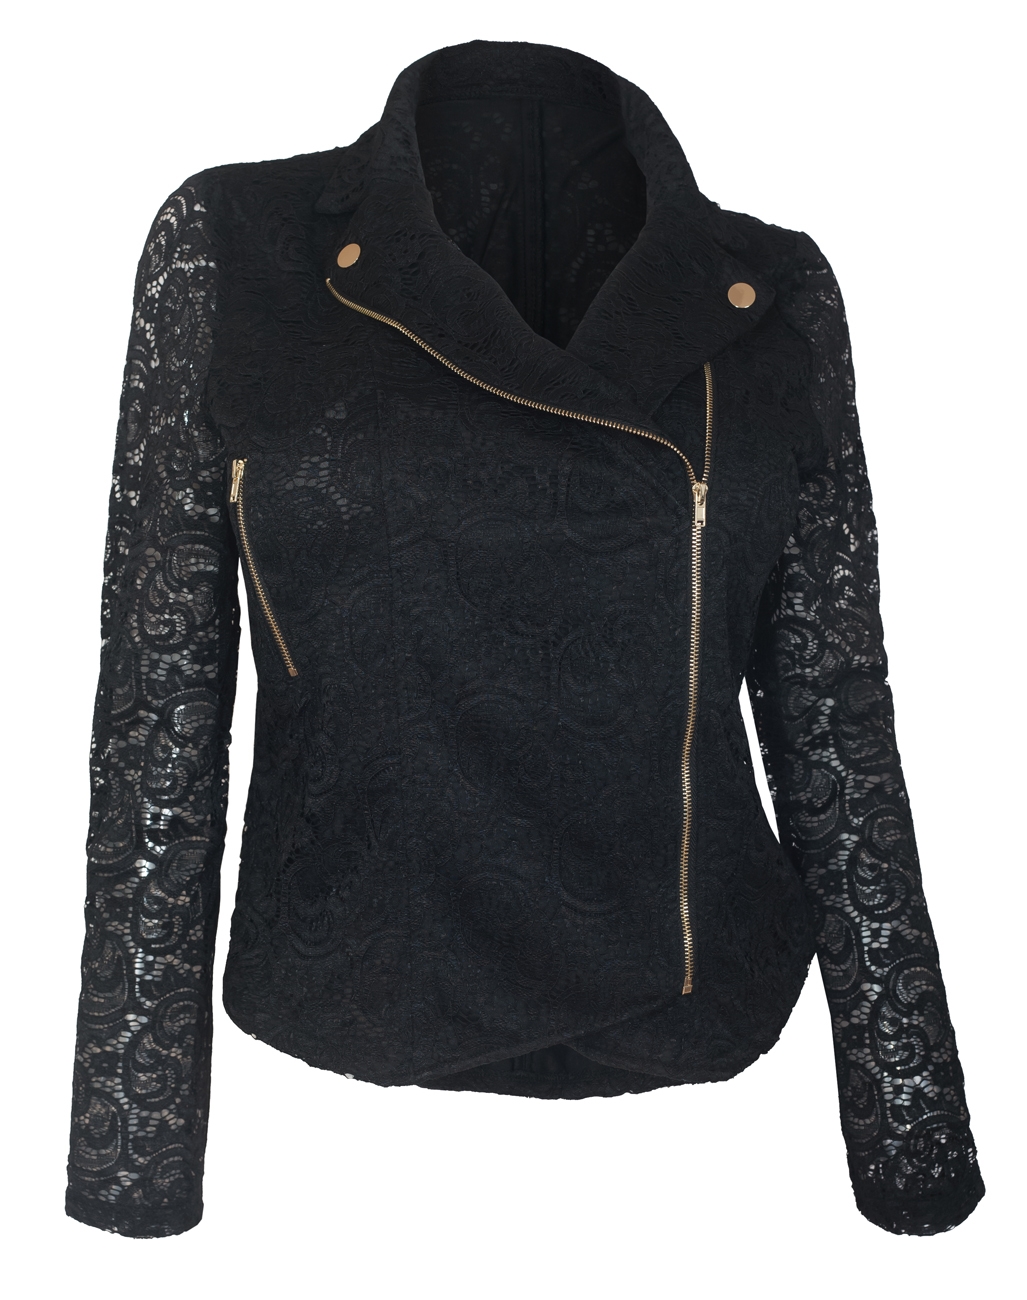 Women's Lace Sleeve Fashion Jacket Black | eVogues Apparel